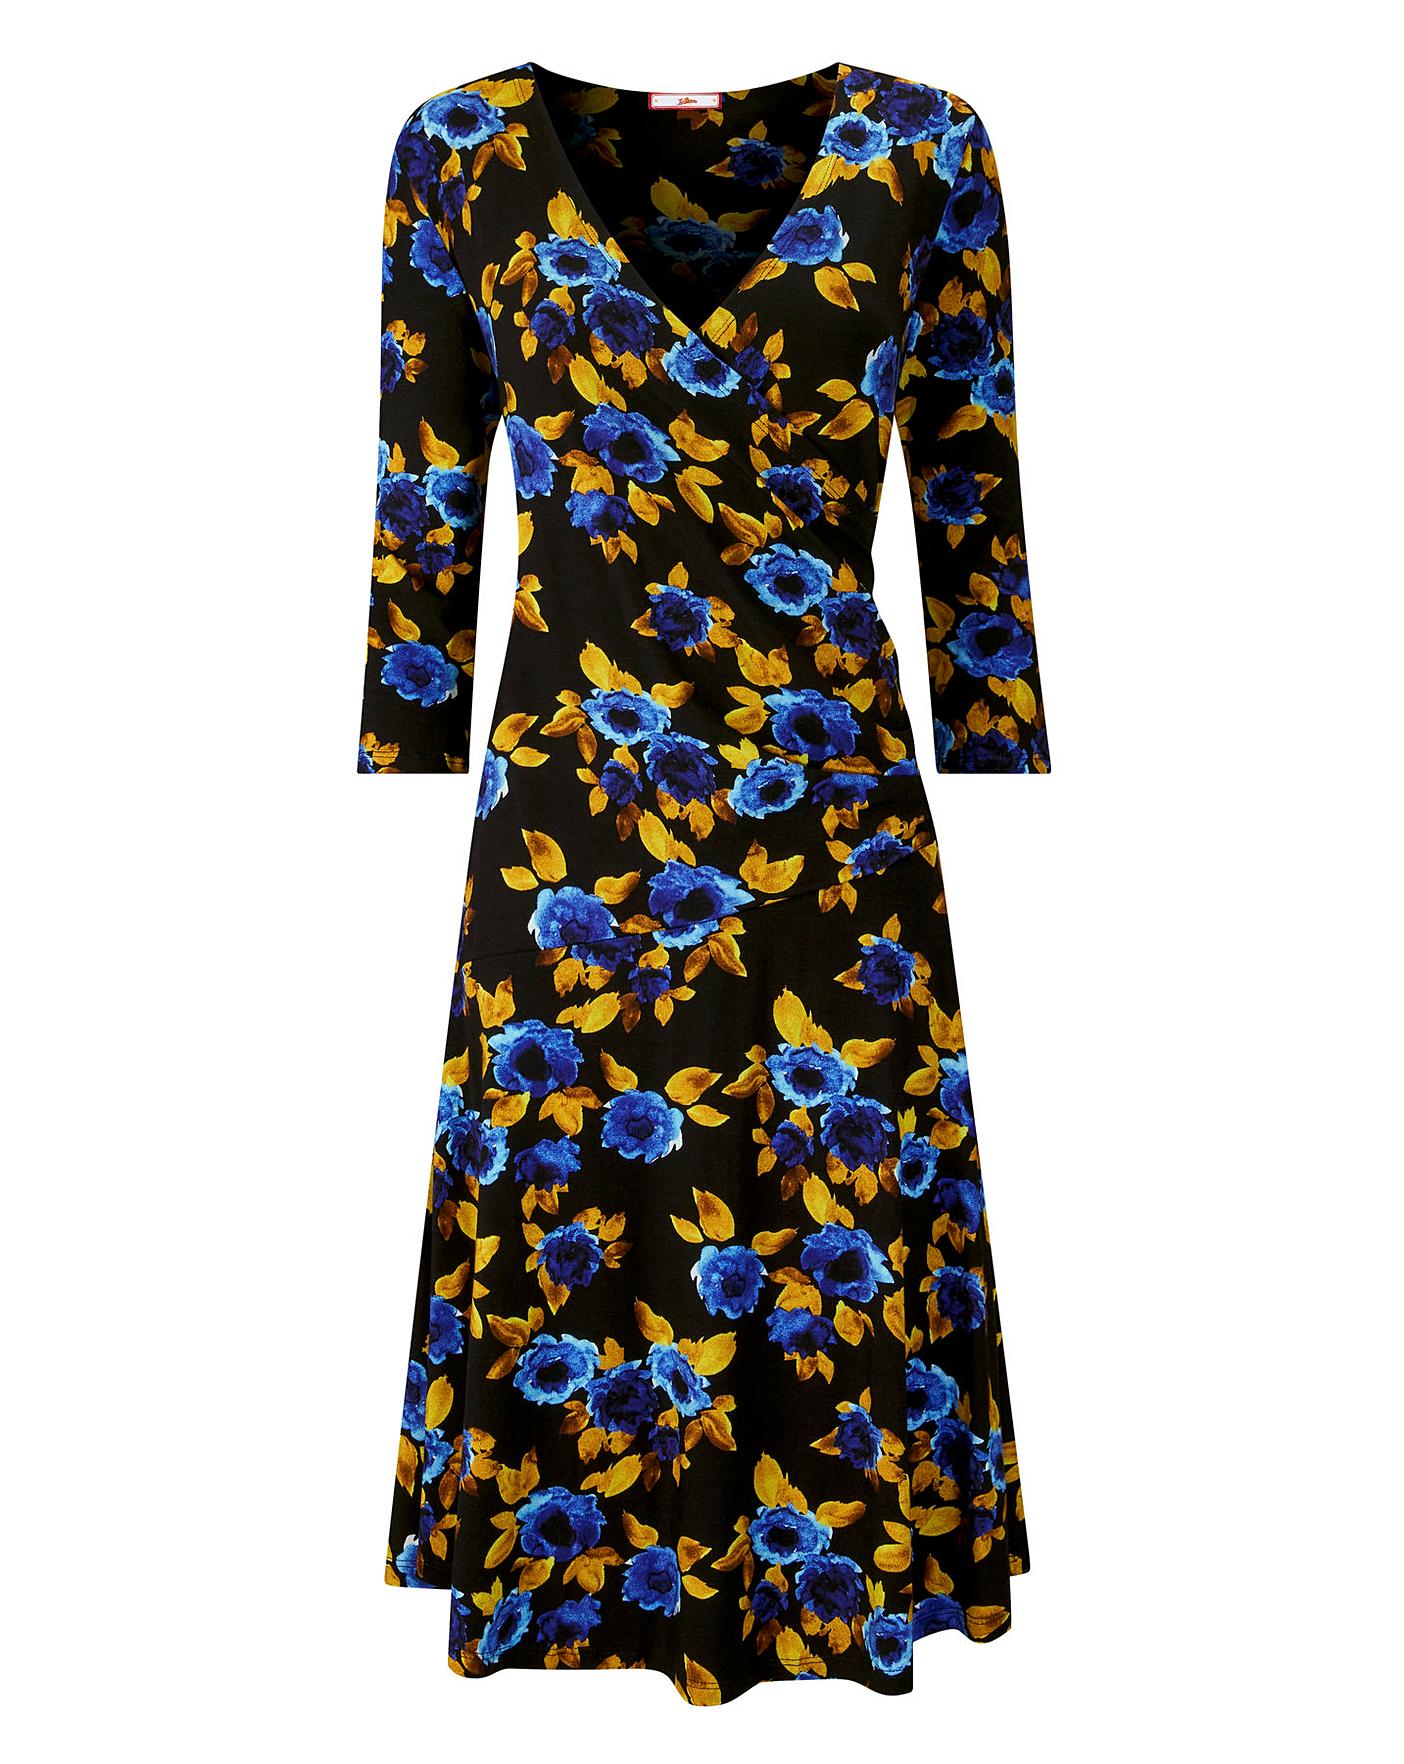 Joe Browns Fabulous Floral Jersey Dress | Simply Be